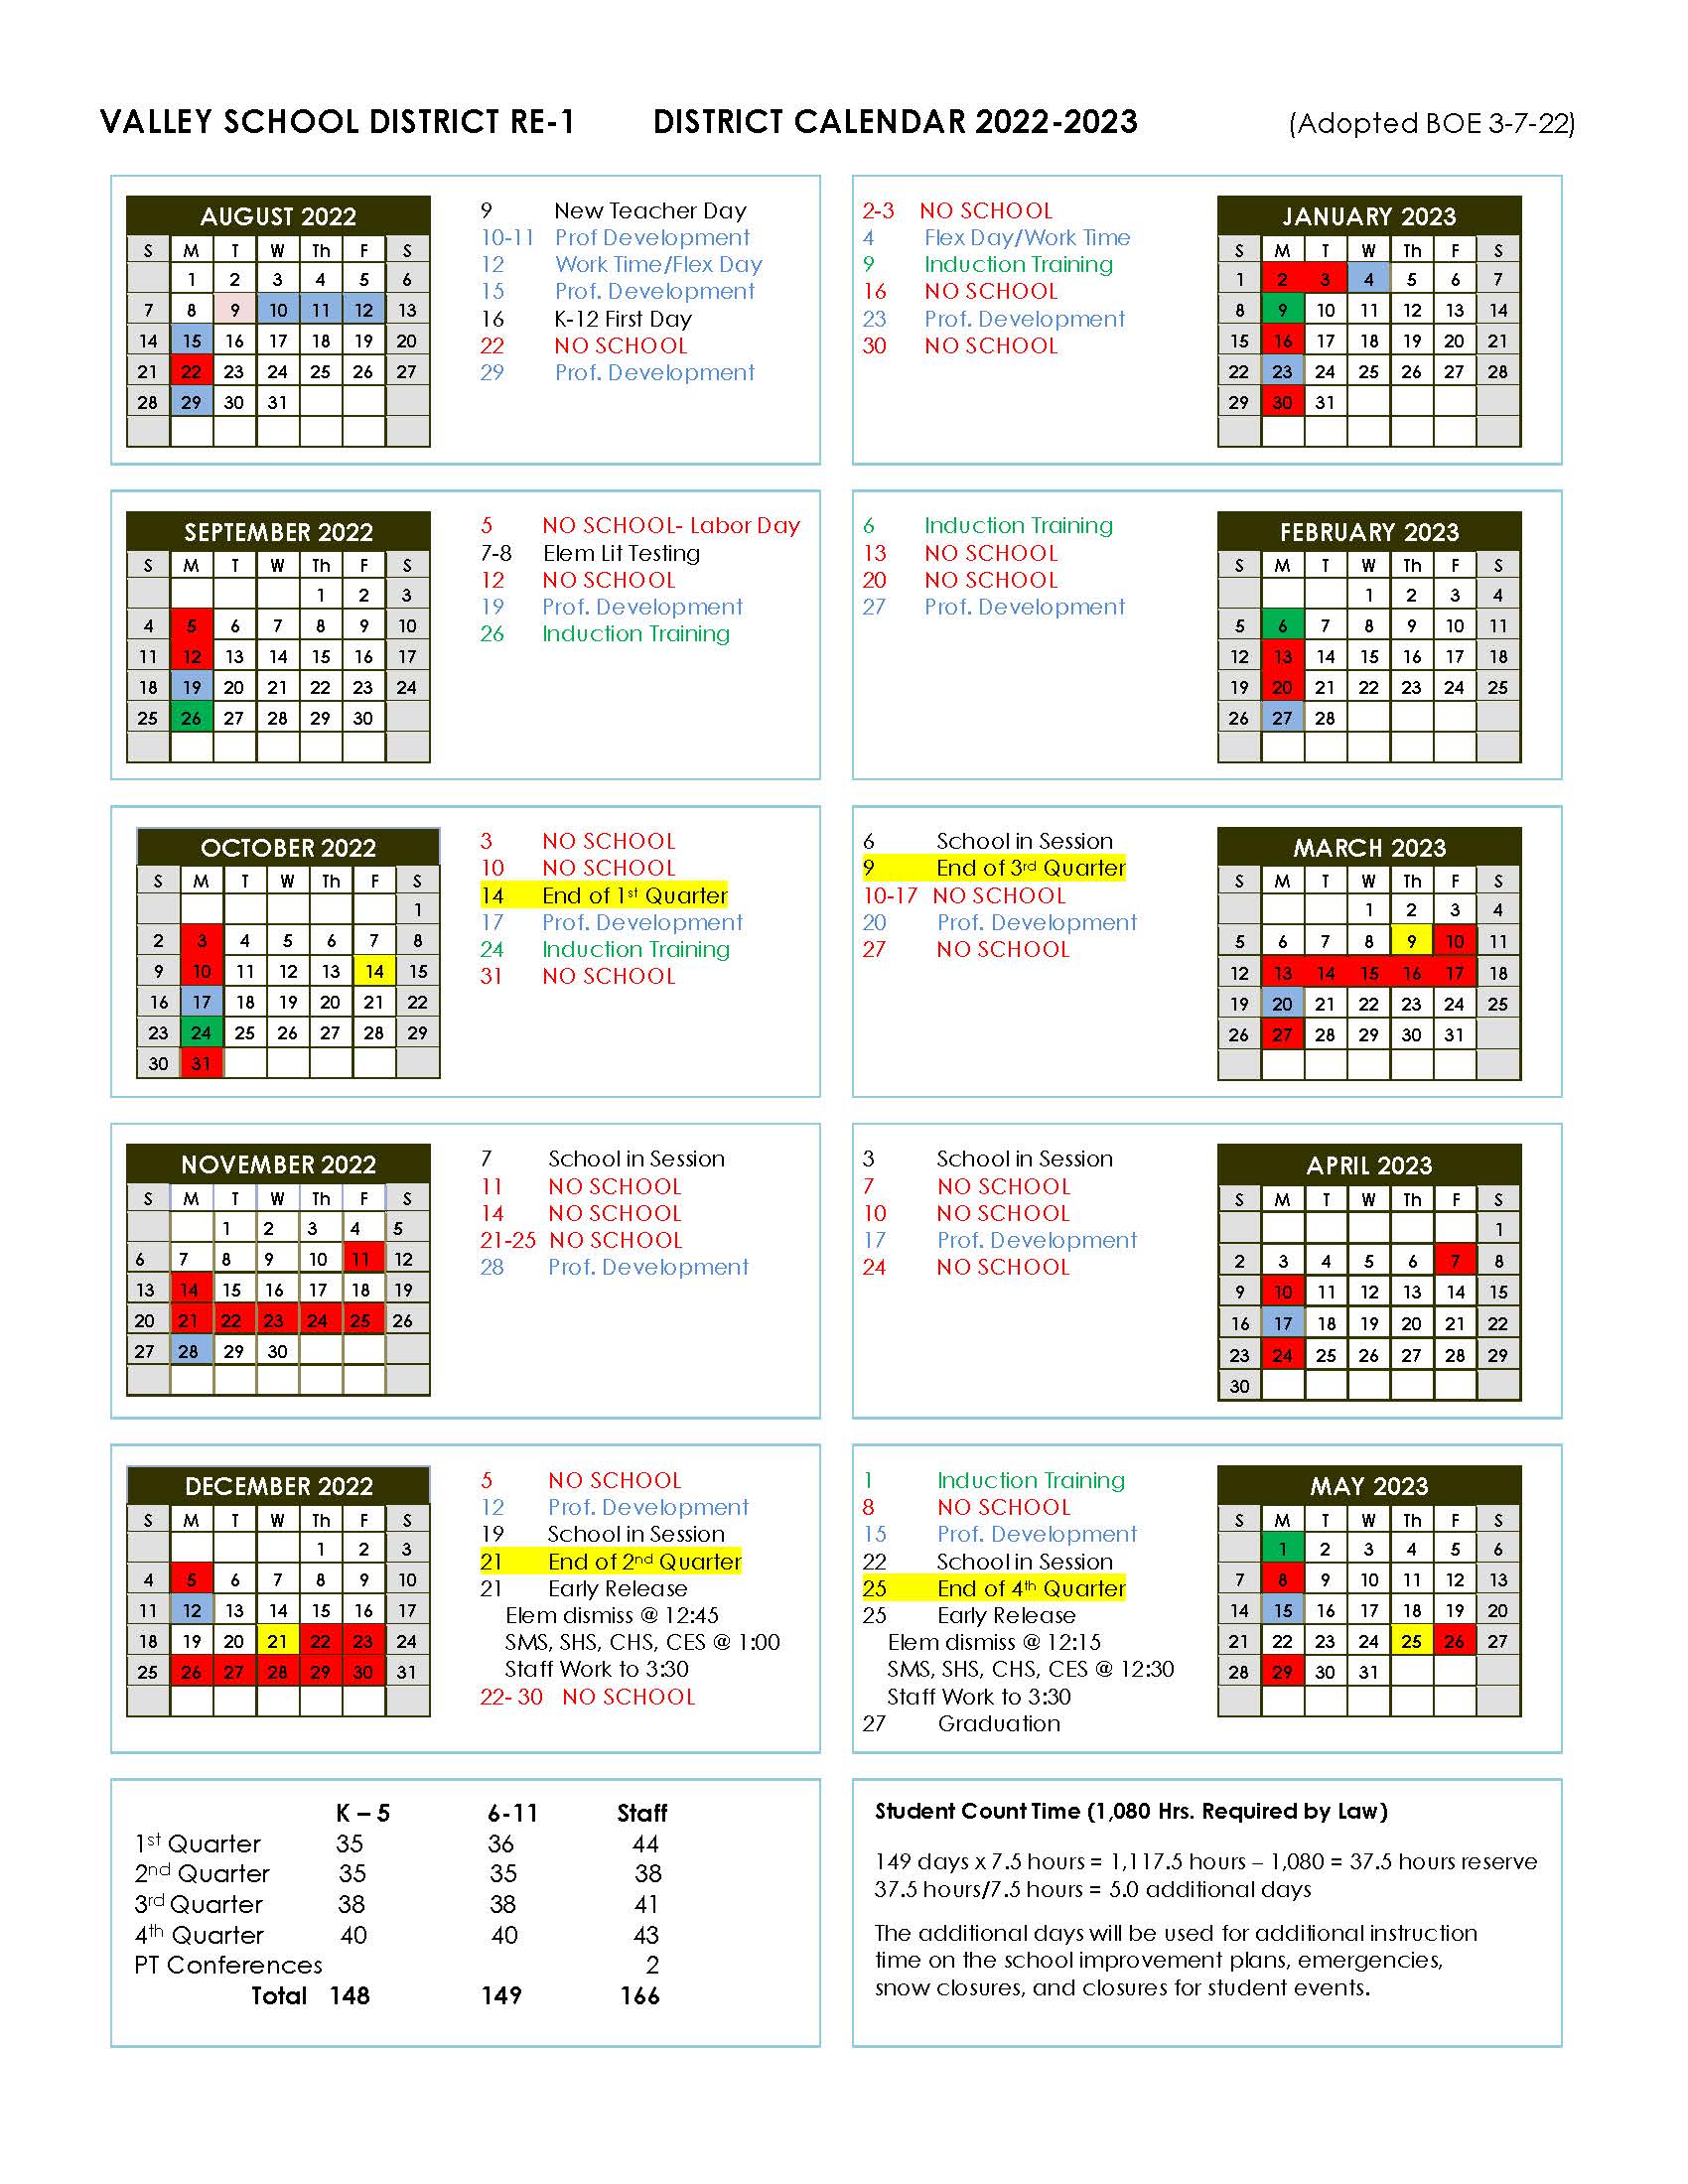 valley-school-district-re-1-calendar-2022-and-2023-publicholidays